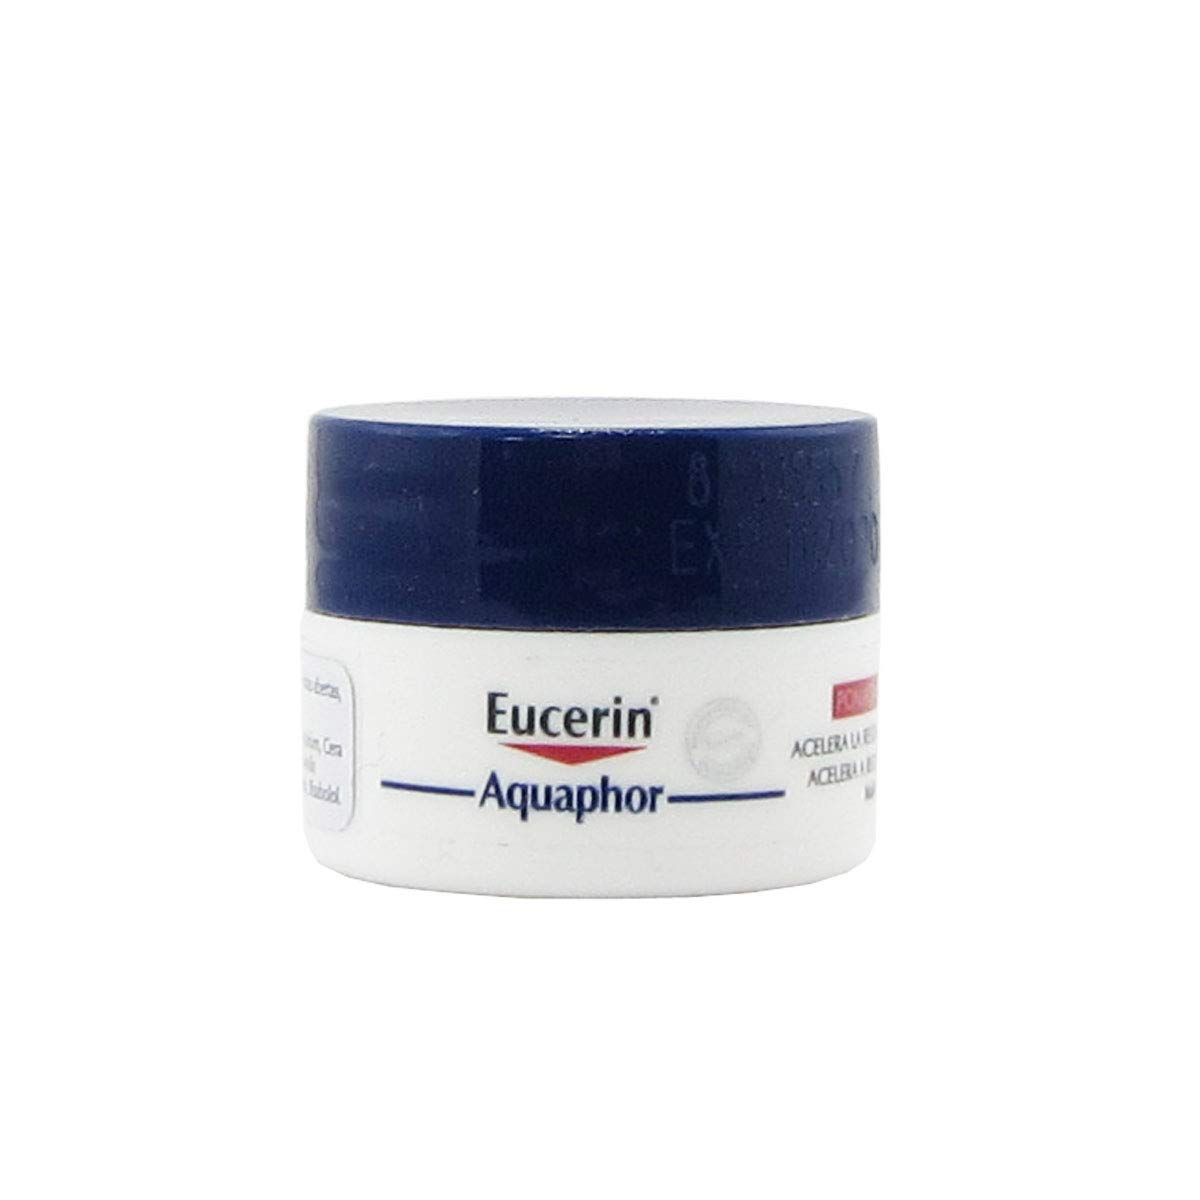 Eucerin Aquaphor Repairing Ointment 7 ml